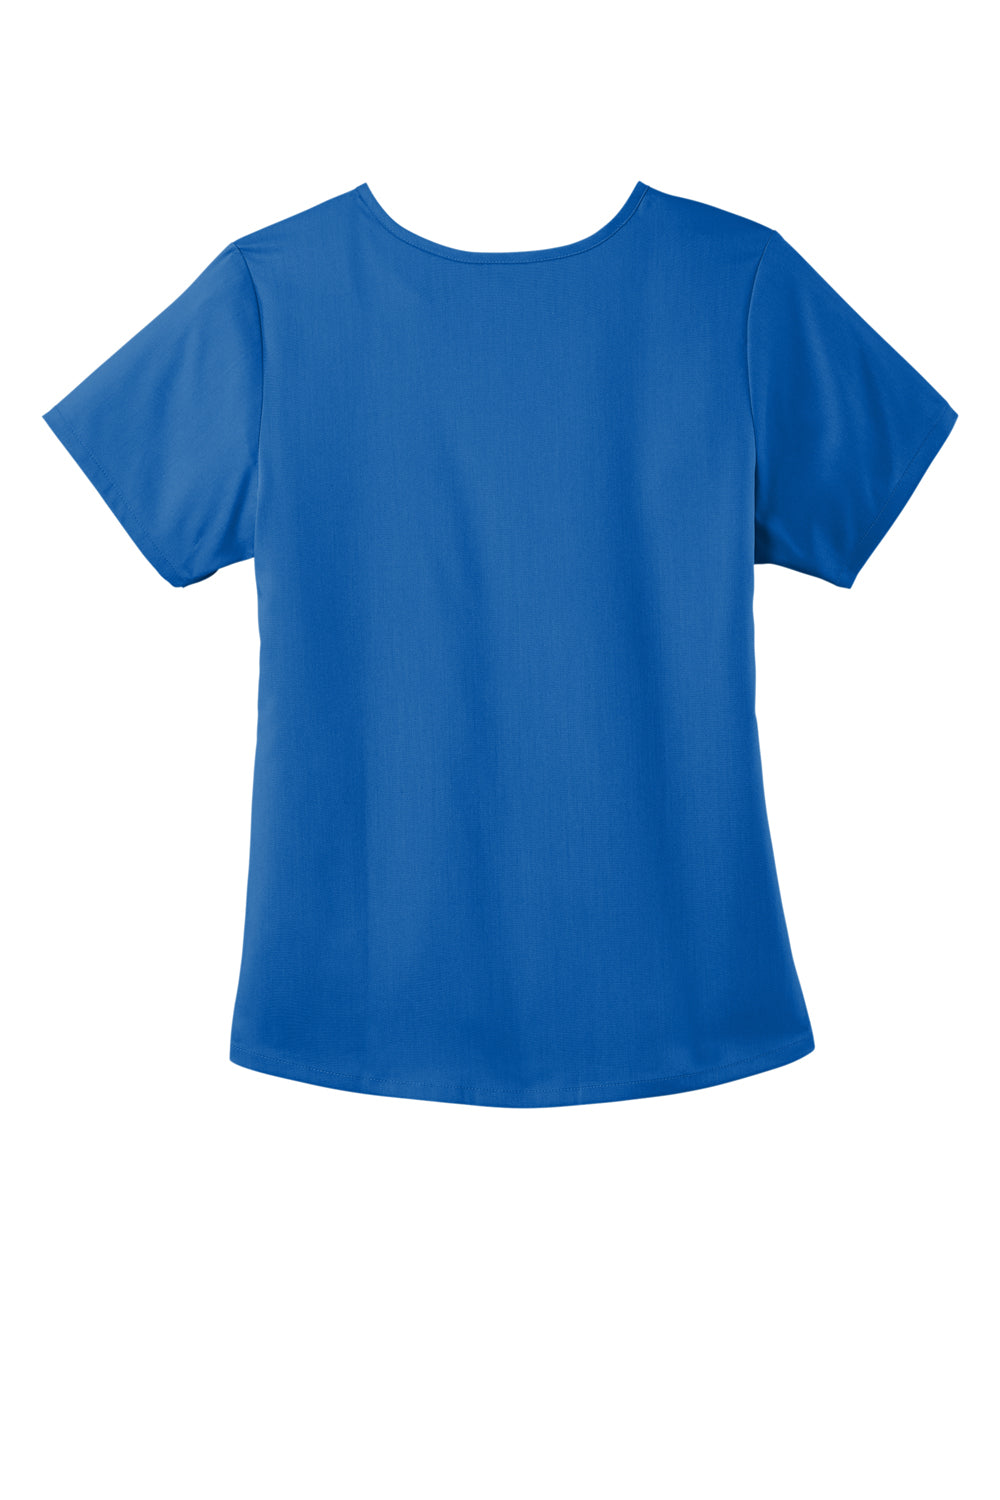 Wonderwink WW4268 Premiere Flex Short Sleeve V-Neck Mock Wrap Shirt Royal Blue Flat Back